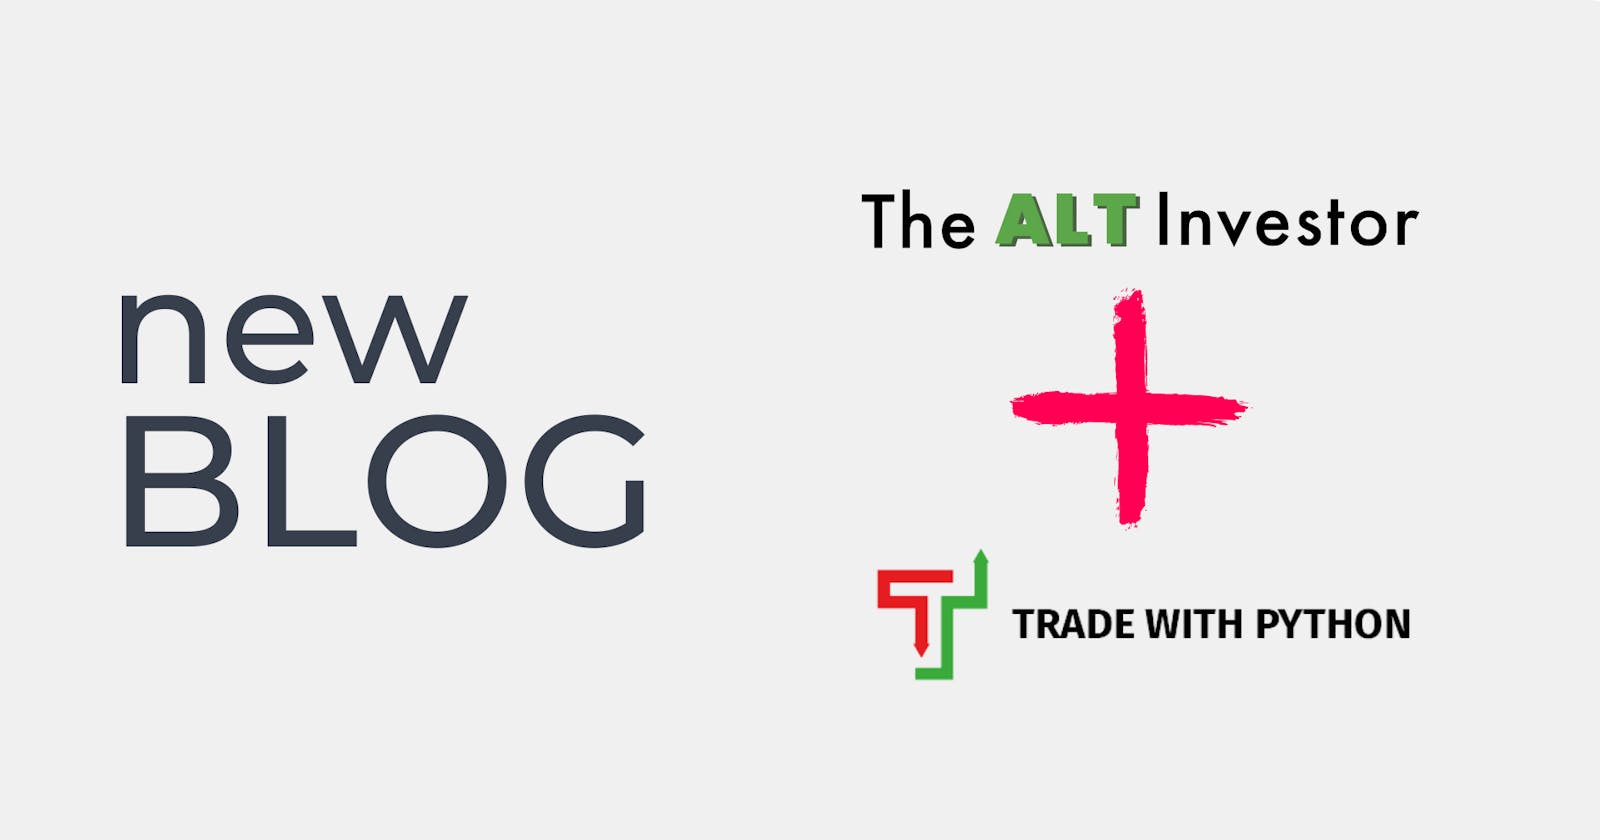 New Blog Announcement: The ALT Investor